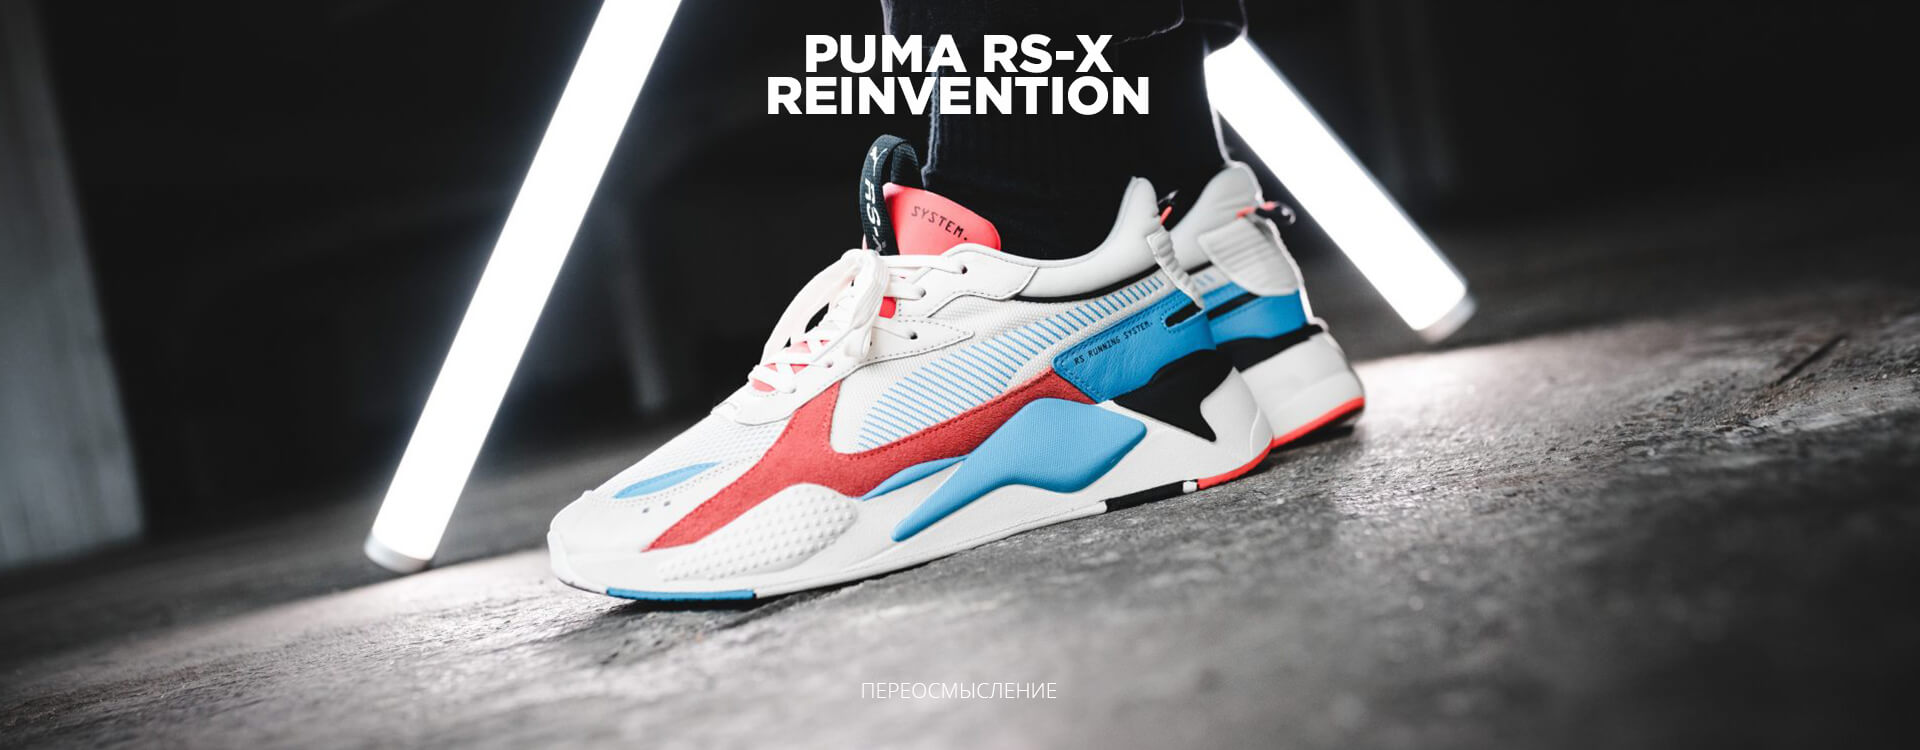 Puma RS-X Reinvention